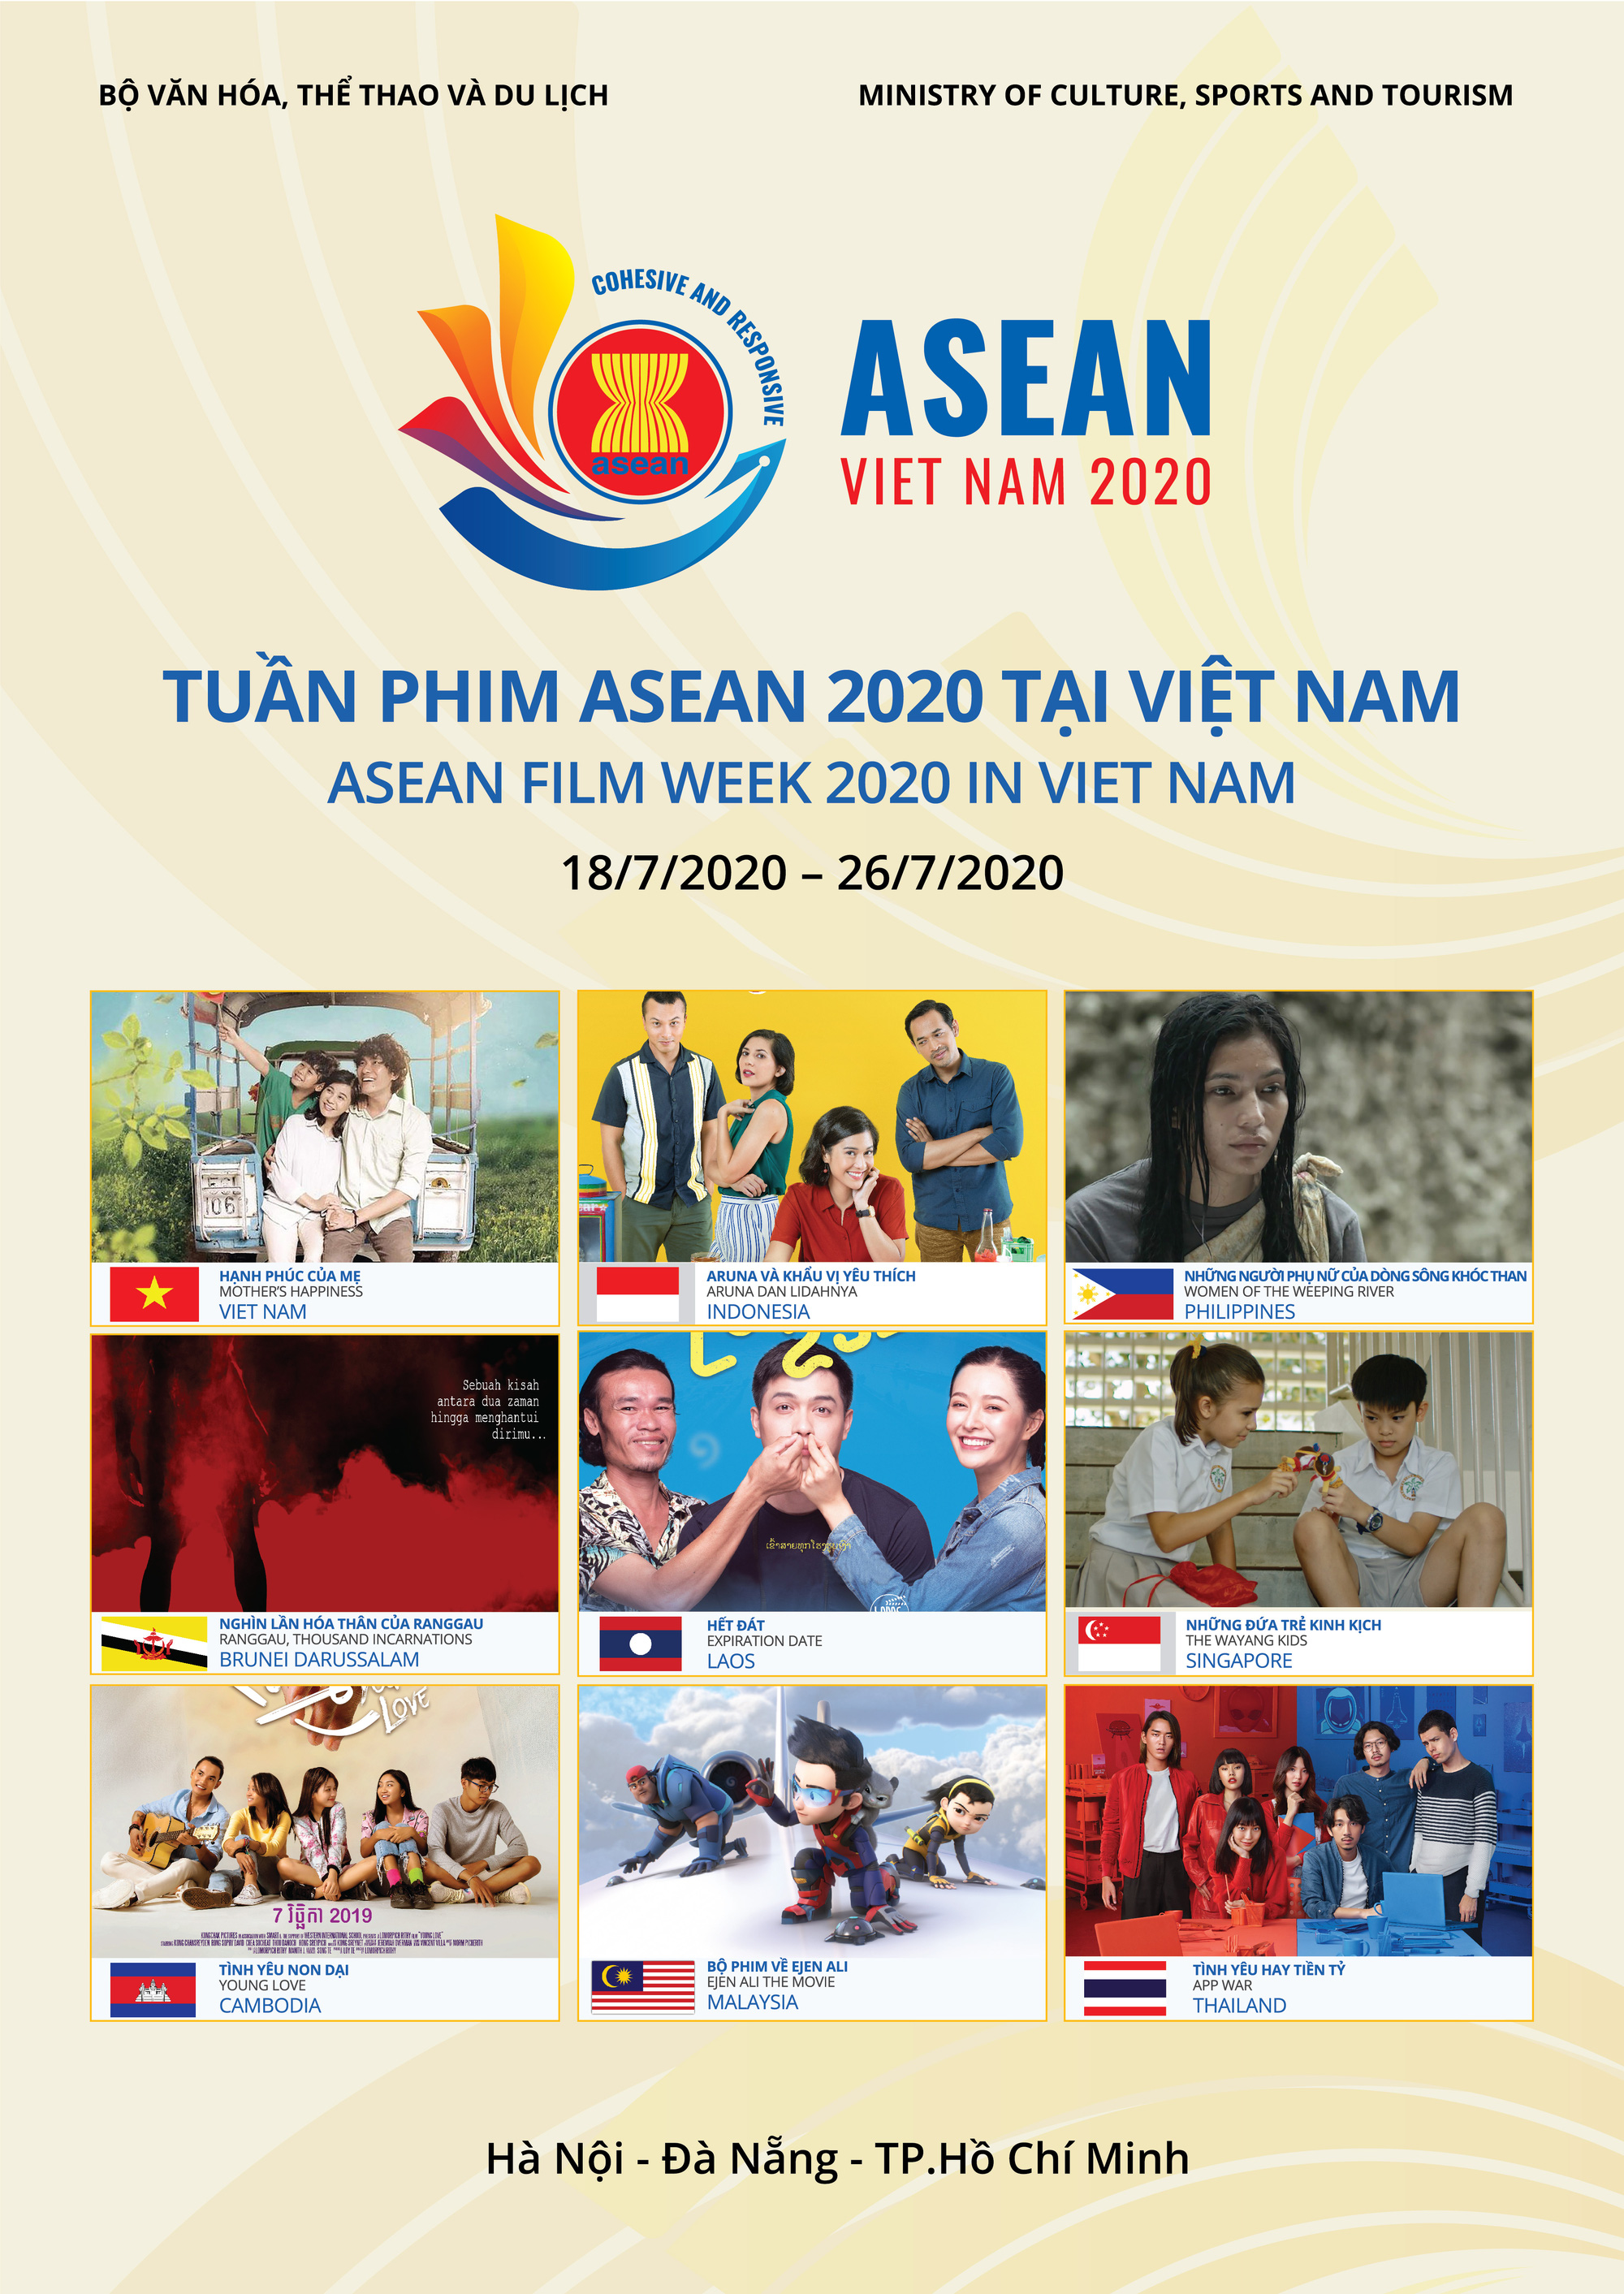 Tuần Phim ASEAN 2020 tại Việt Nam - Ảnh 1.